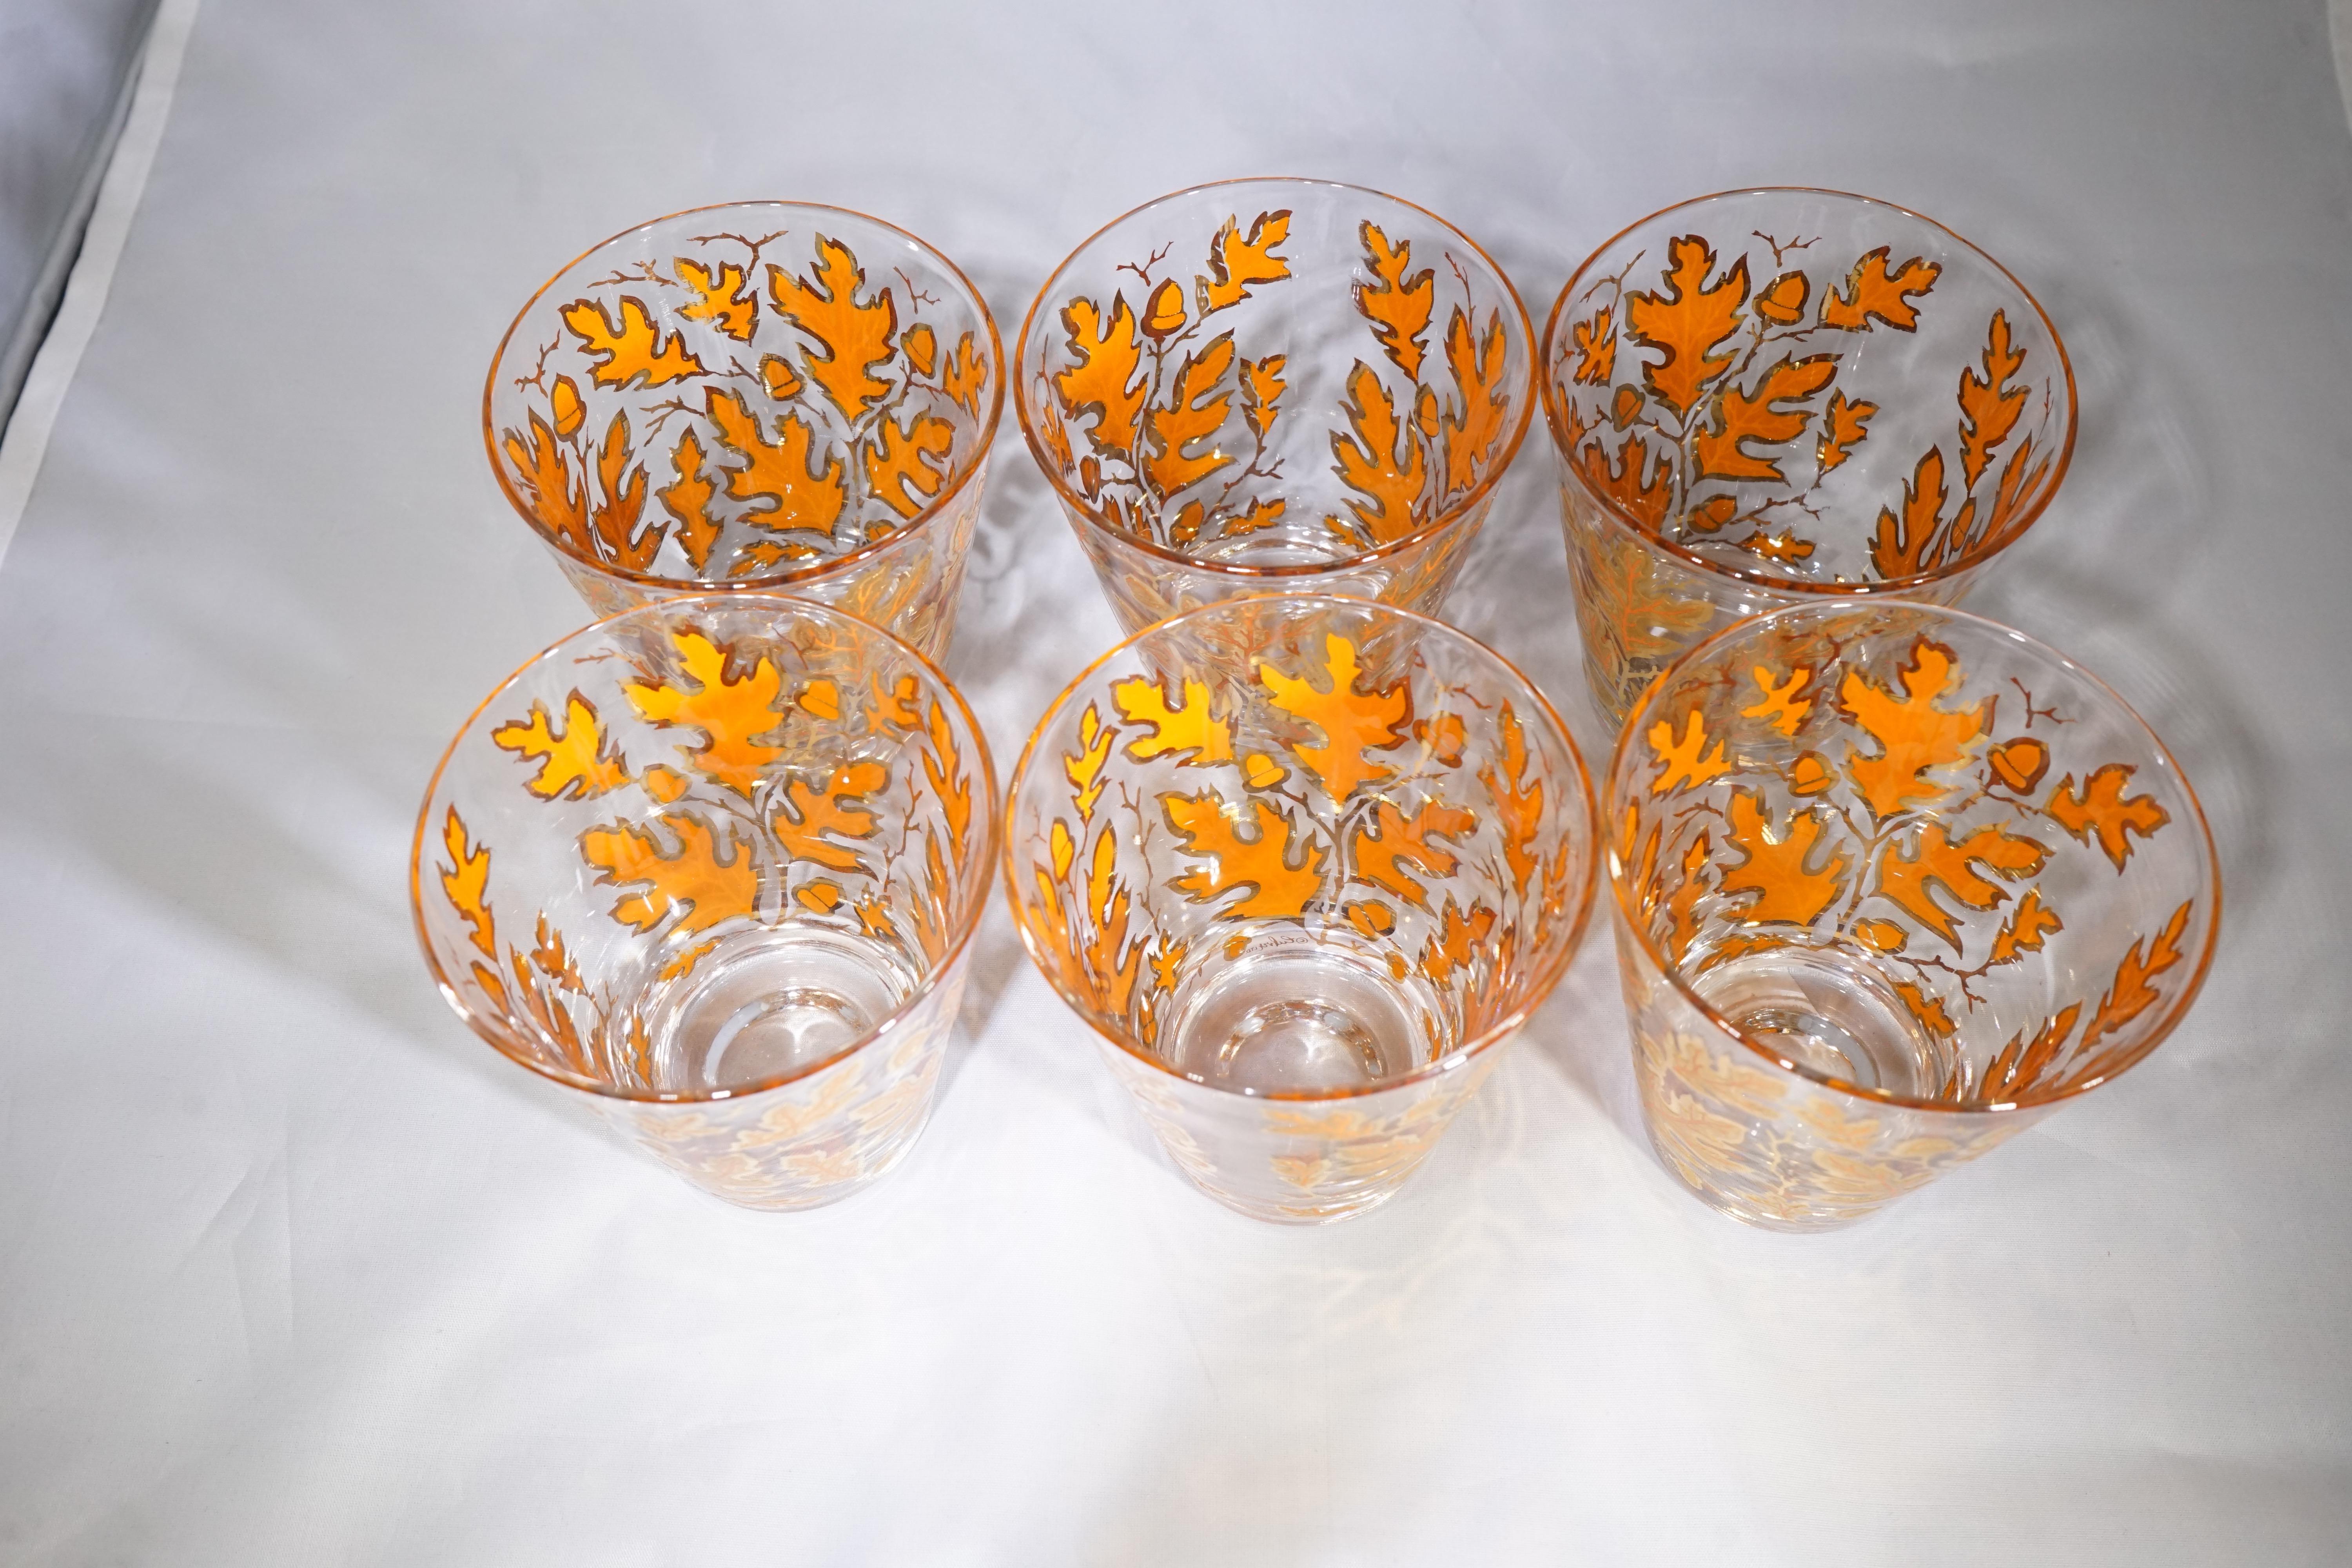 Midcentury American six-piece glassware set featuring orange 